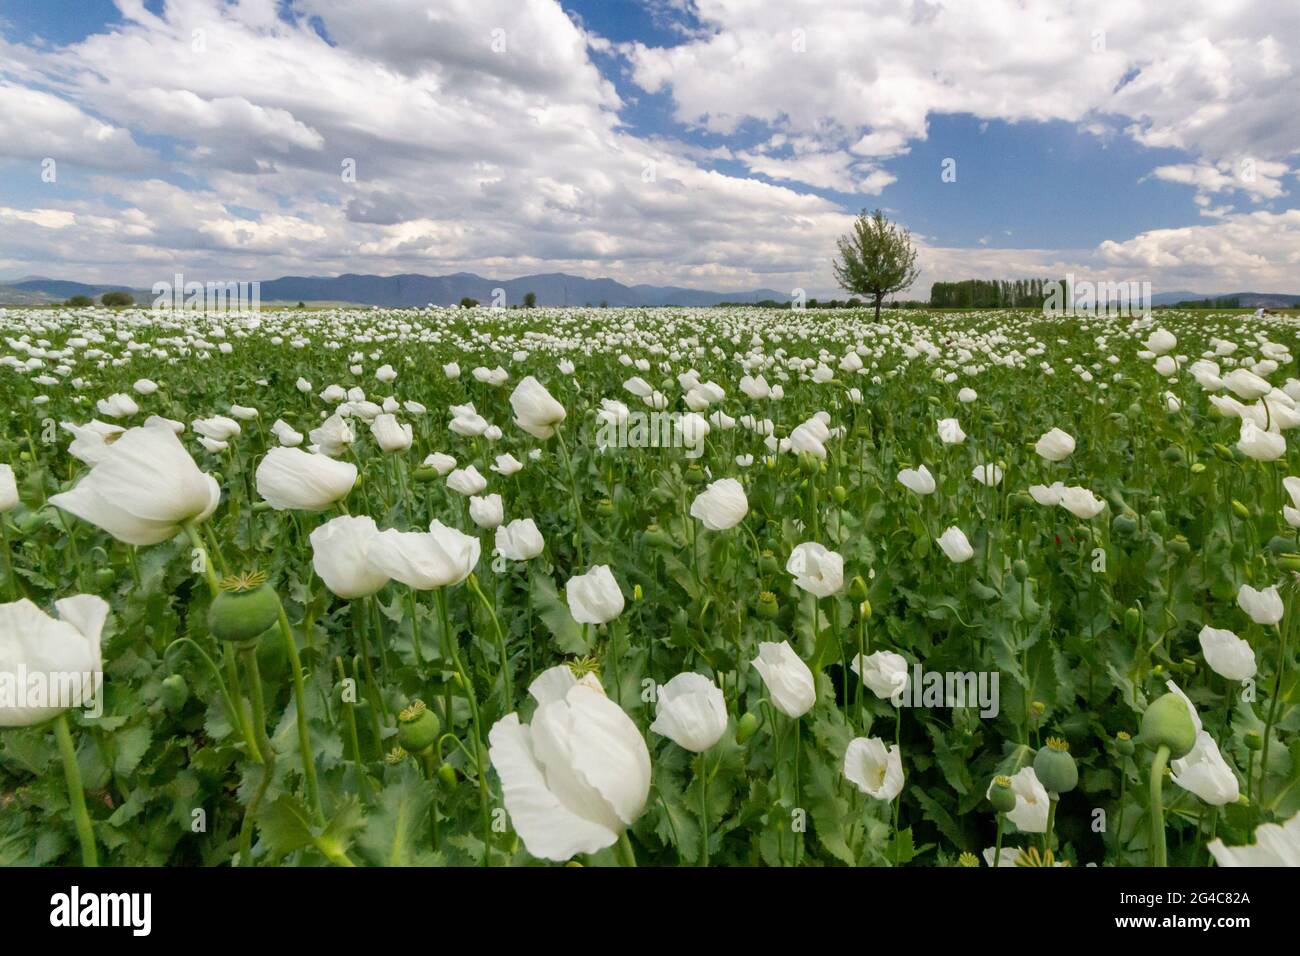 Opium poppies known as Papaver Somniferum in Latin, Turkey Stock Photo